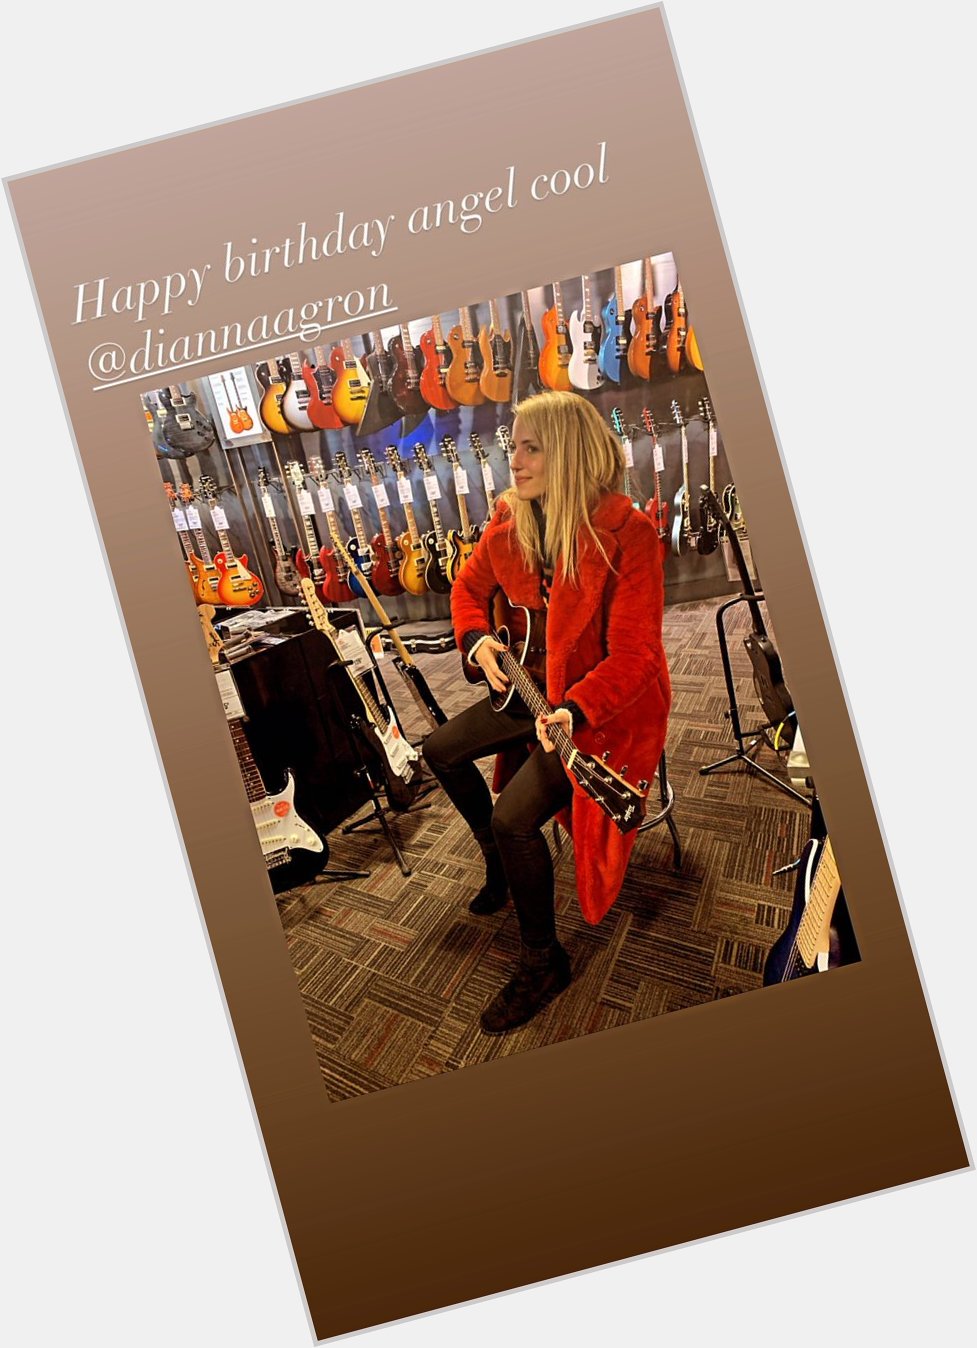 Jenna Coleman on Instagram stories, wishing her friend, Dianna Agron, a happy birthday. 